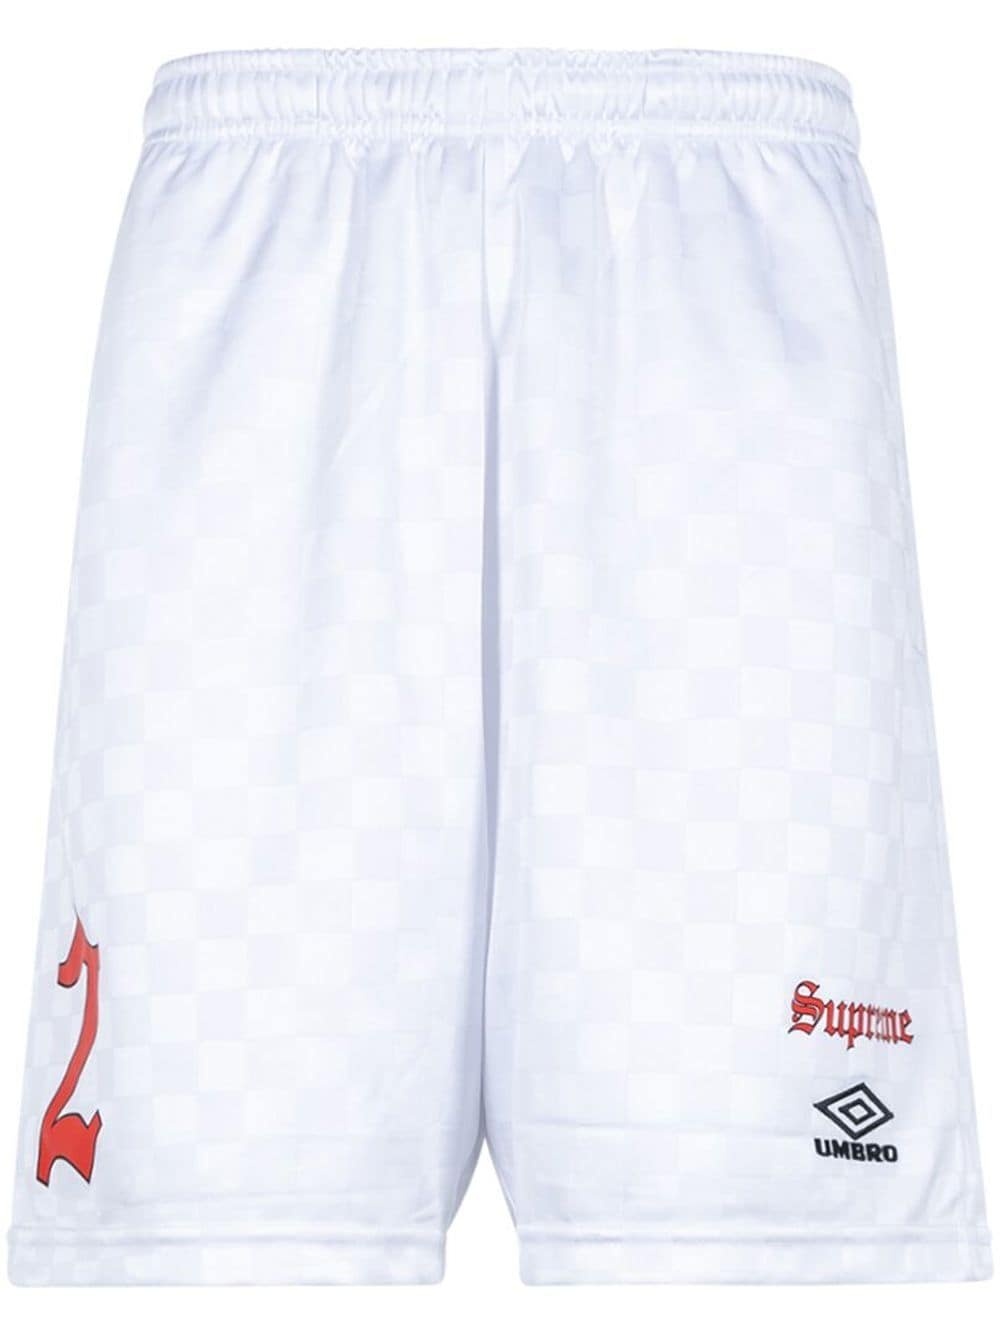 x Umbro soccer shorts - 1